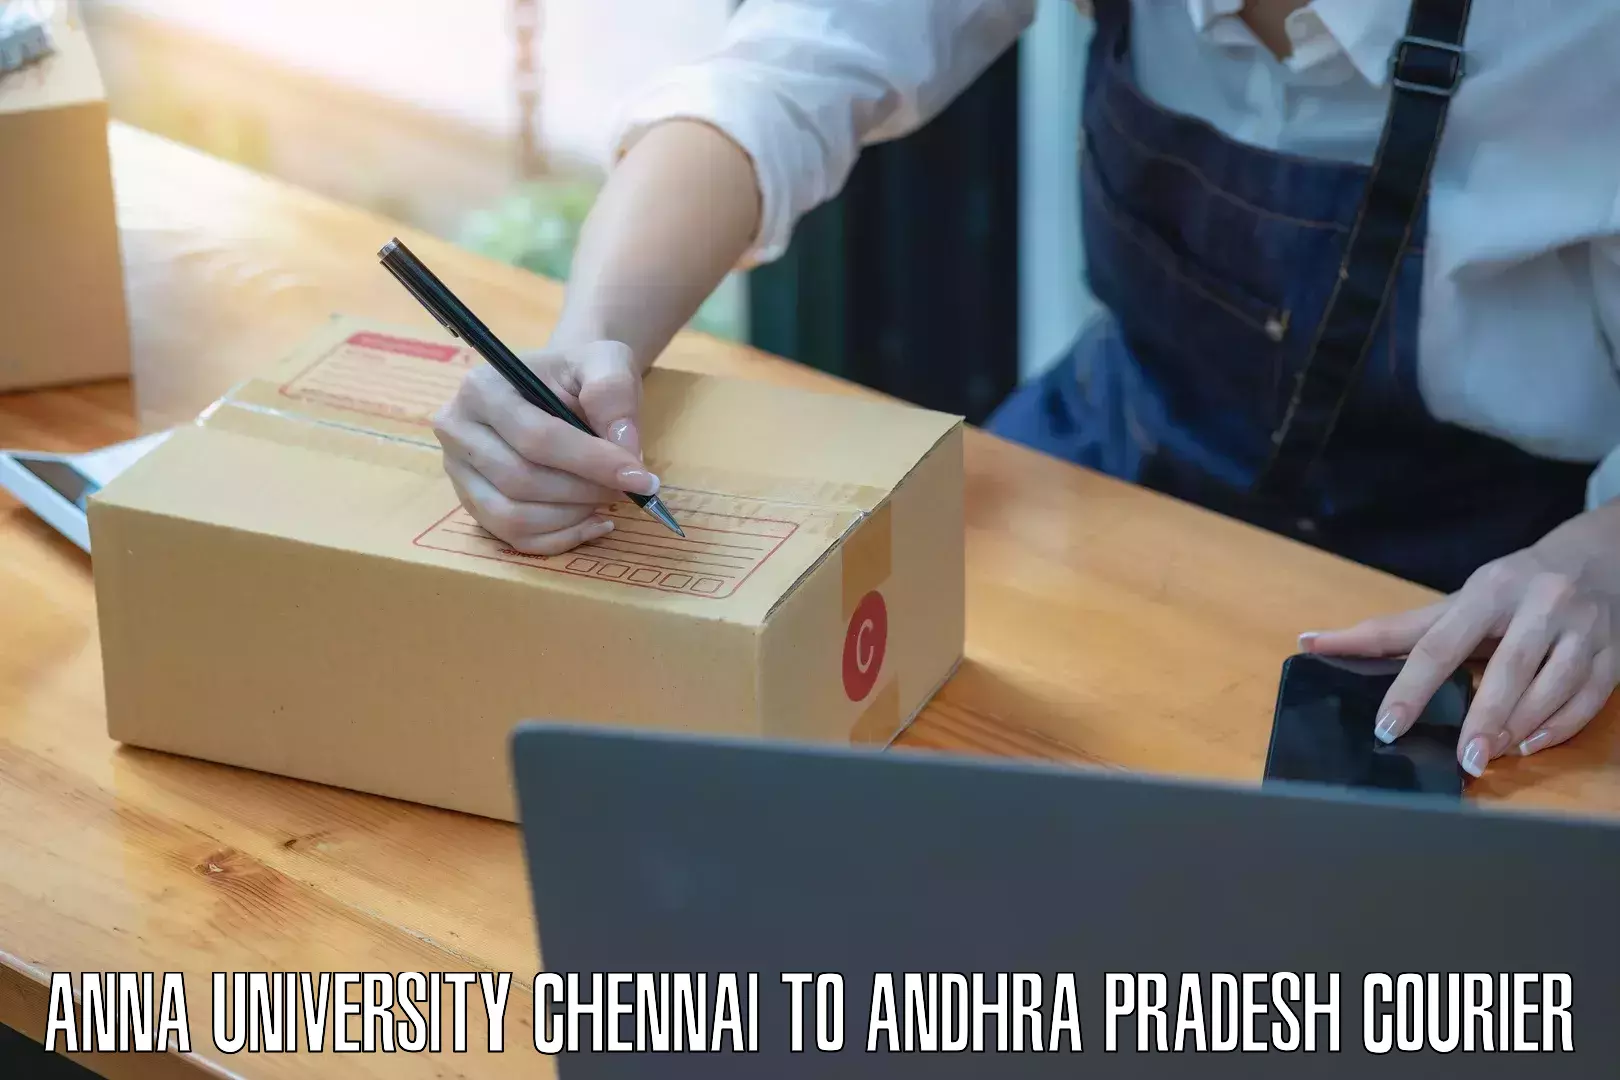 Rapid freight solutions Anna University Chennai to Andhra Pradesh